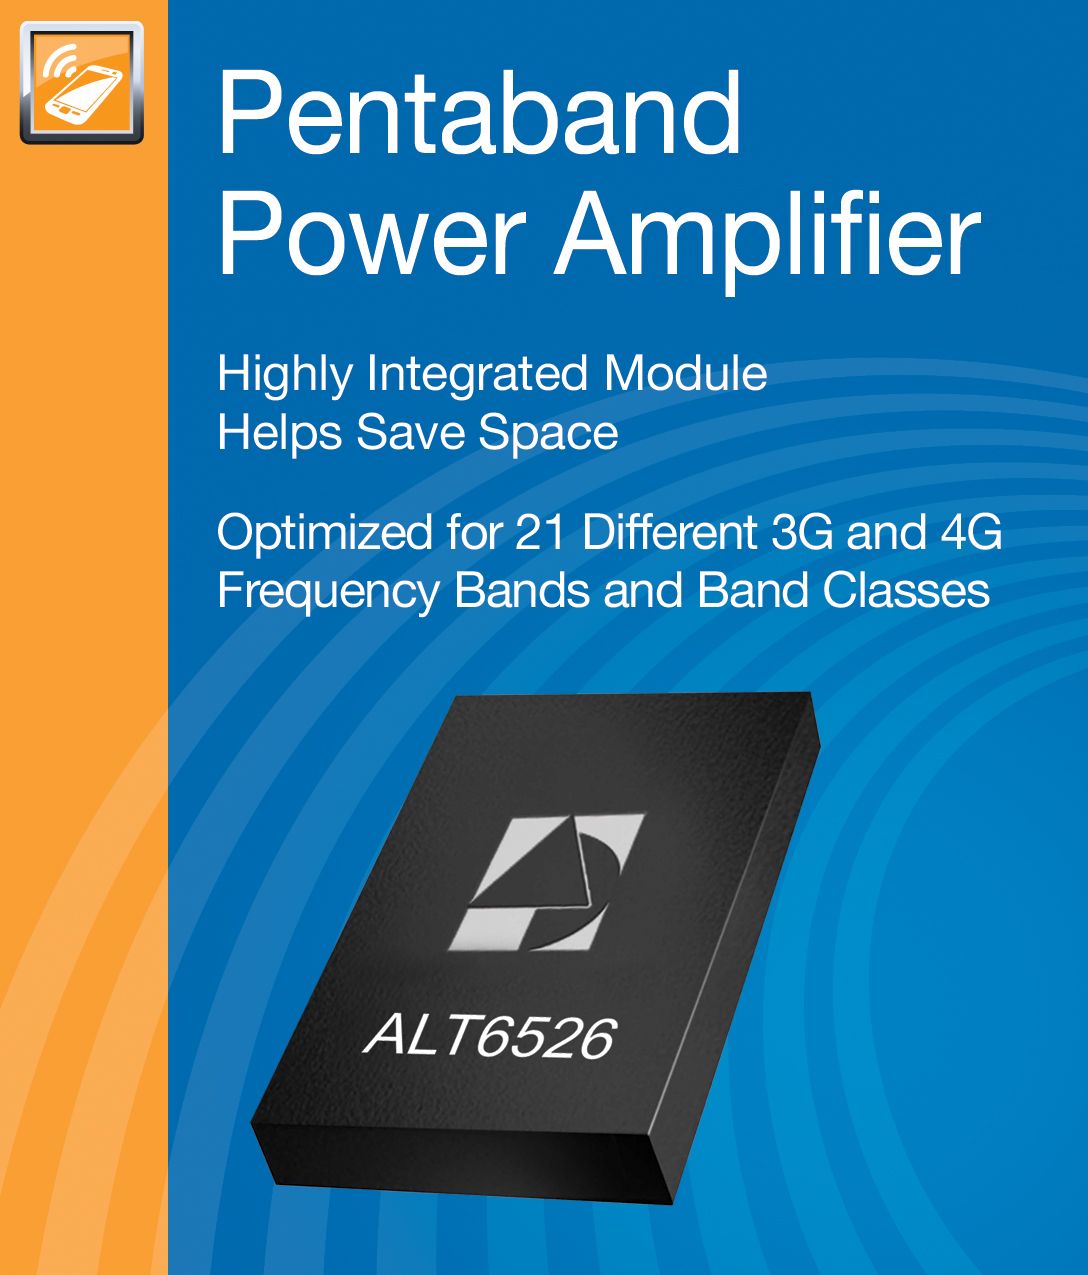 ANADIGICS' Pentaband Power Amplifier